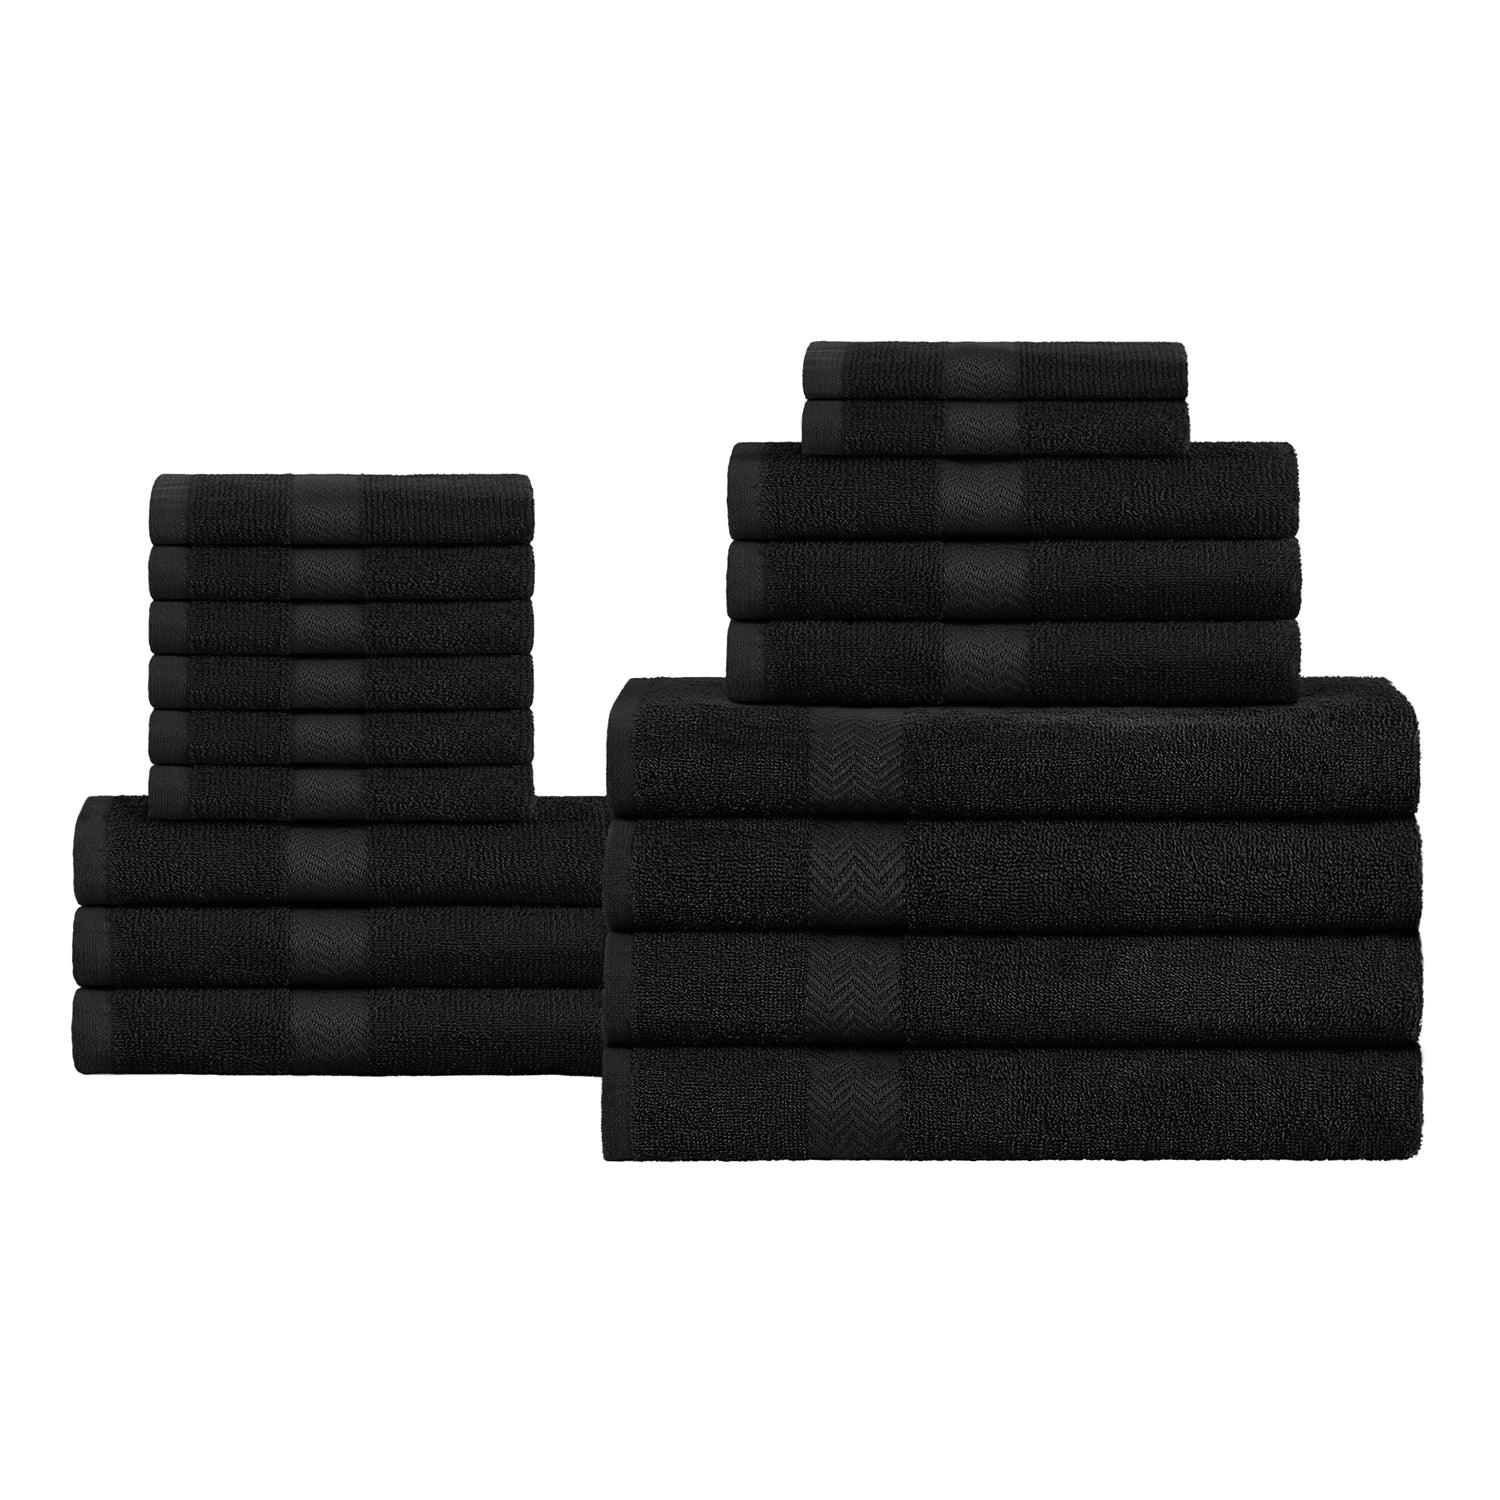 Superior Bath Towels Highly Absorbent Eco-Friendly Soft Cotton 18 Piece Towel Set - Black